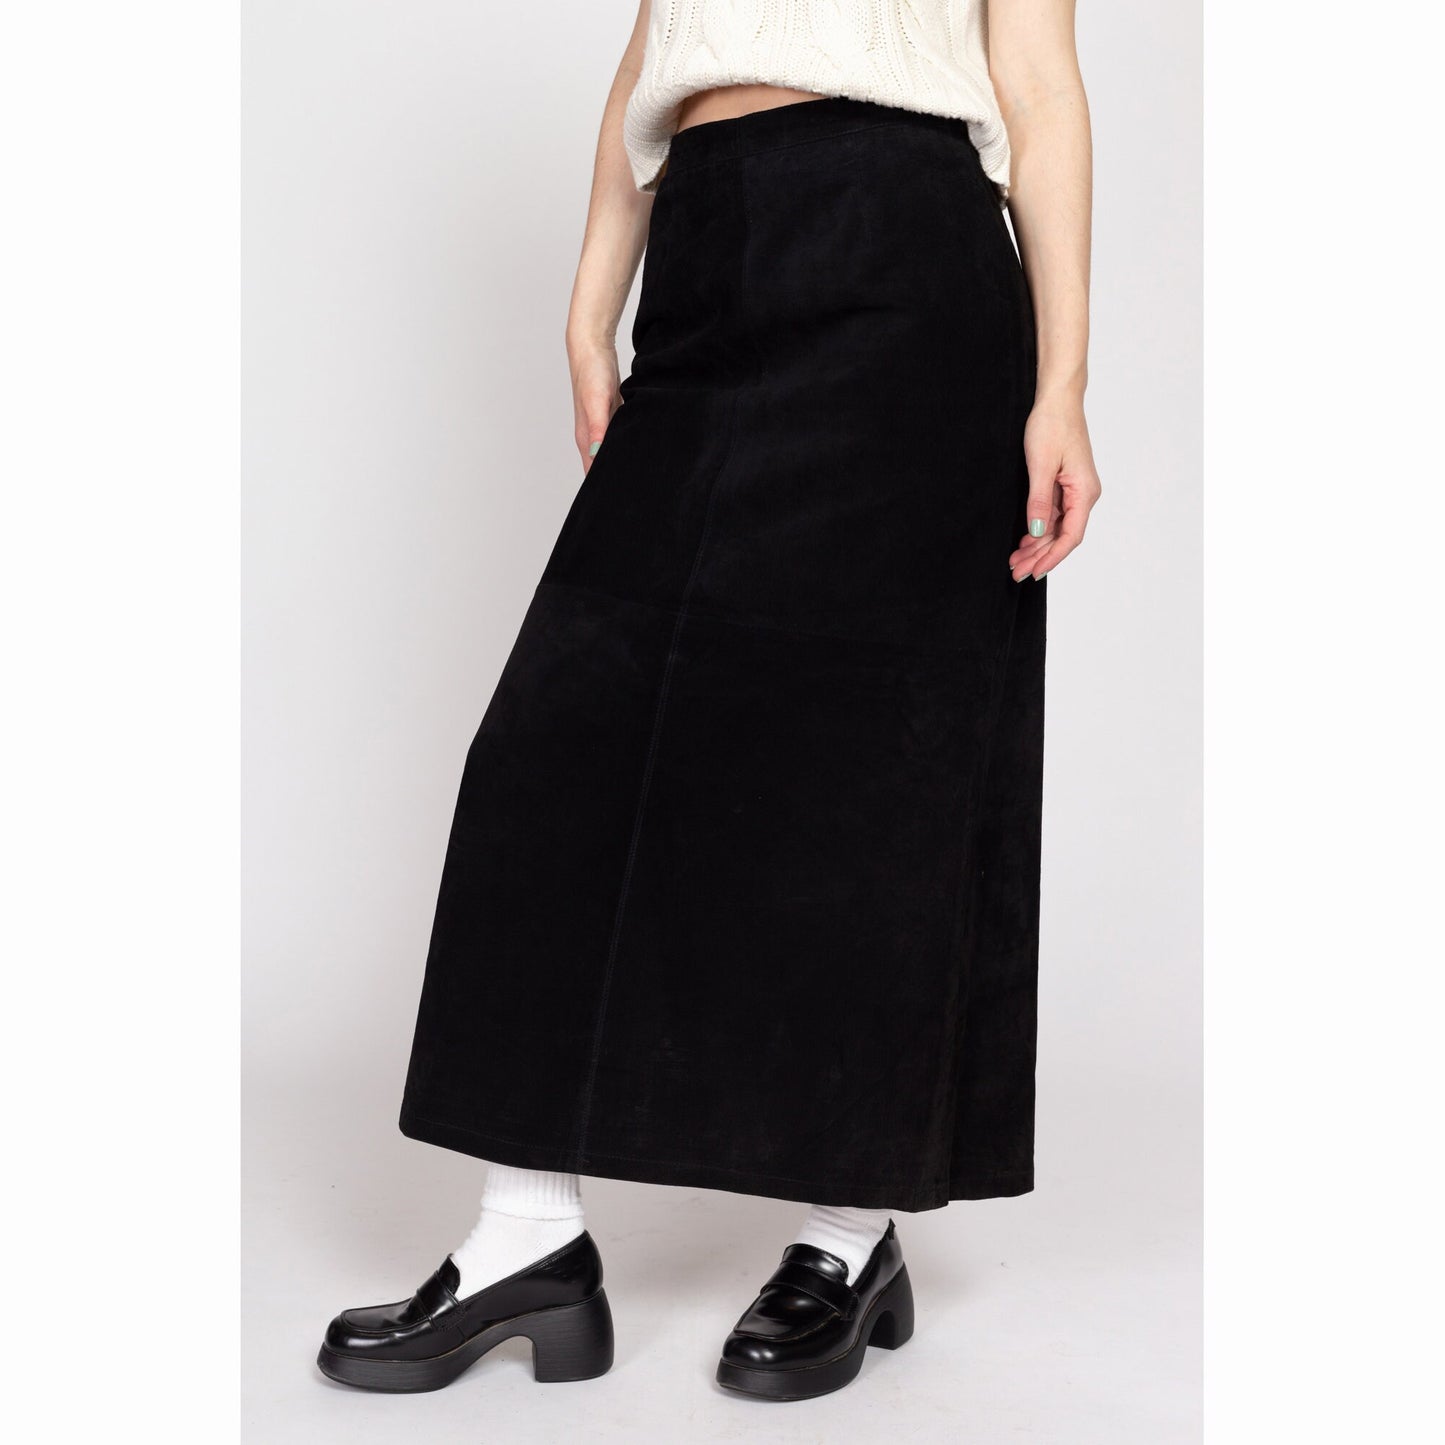 Medium 90s Black Suede Maxi Skirt 28.5" | Vintage Boho A Line Leather High Waisted Skirt